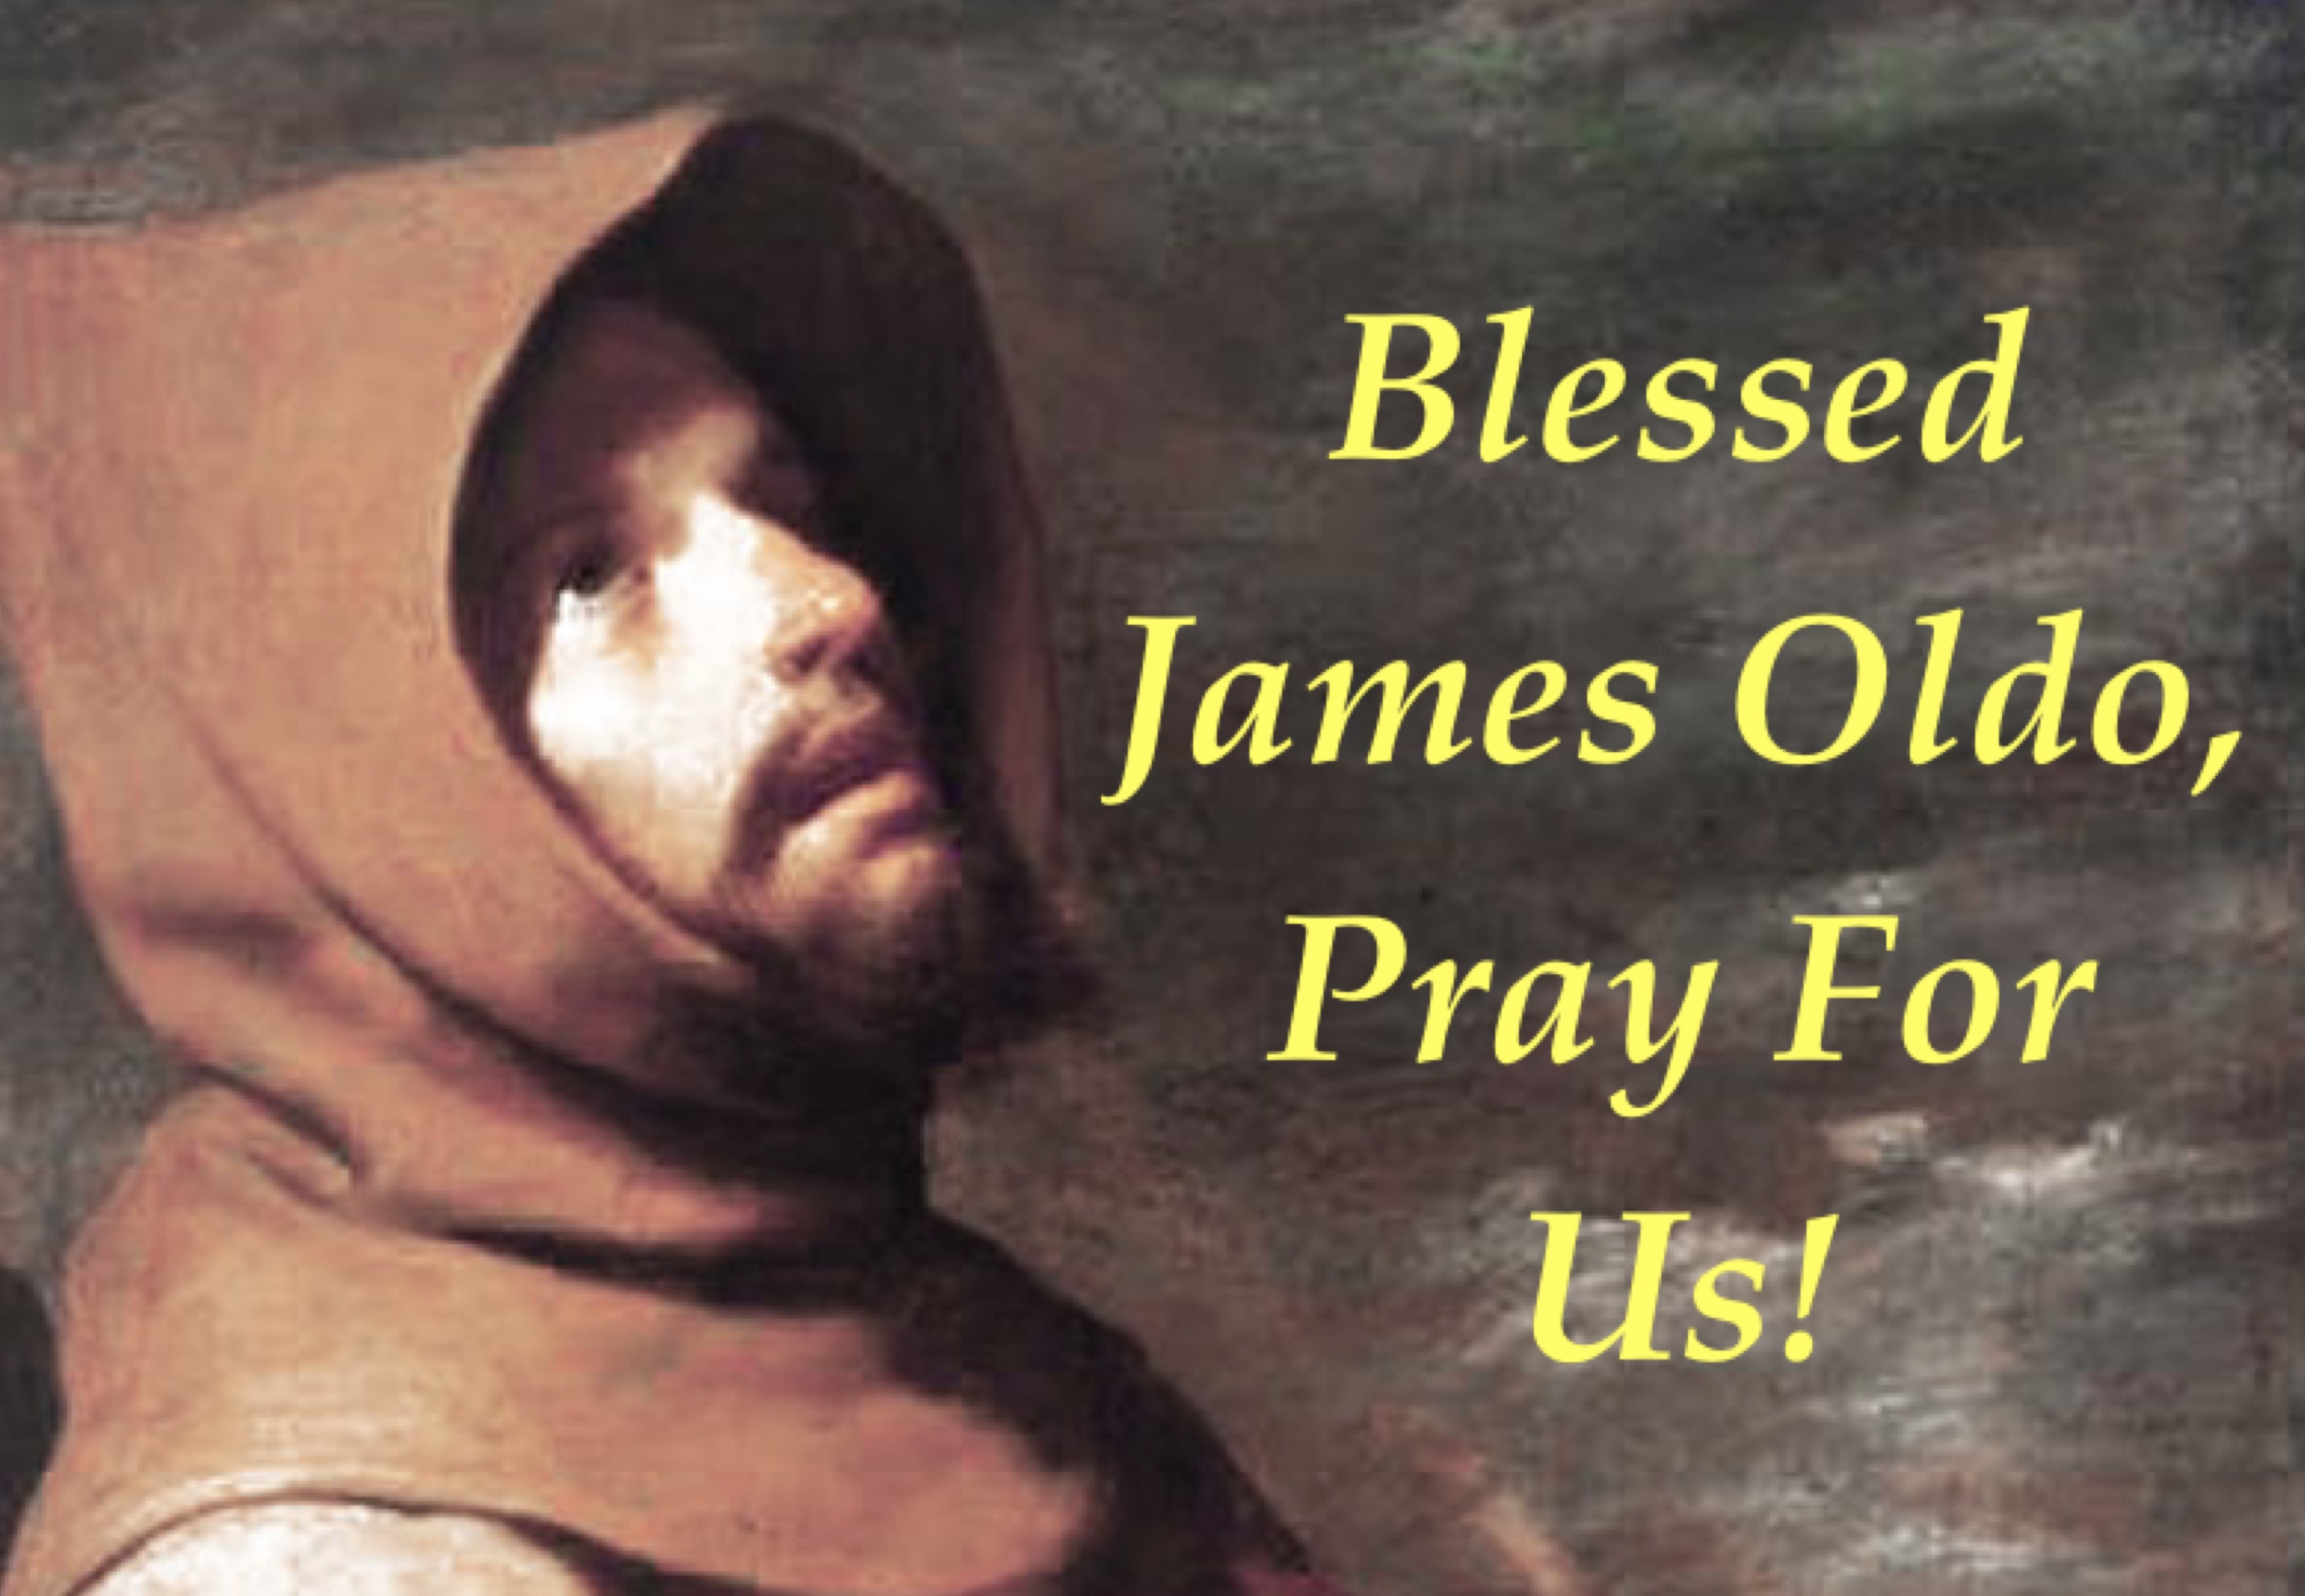 18th April - Blessed James Oldo